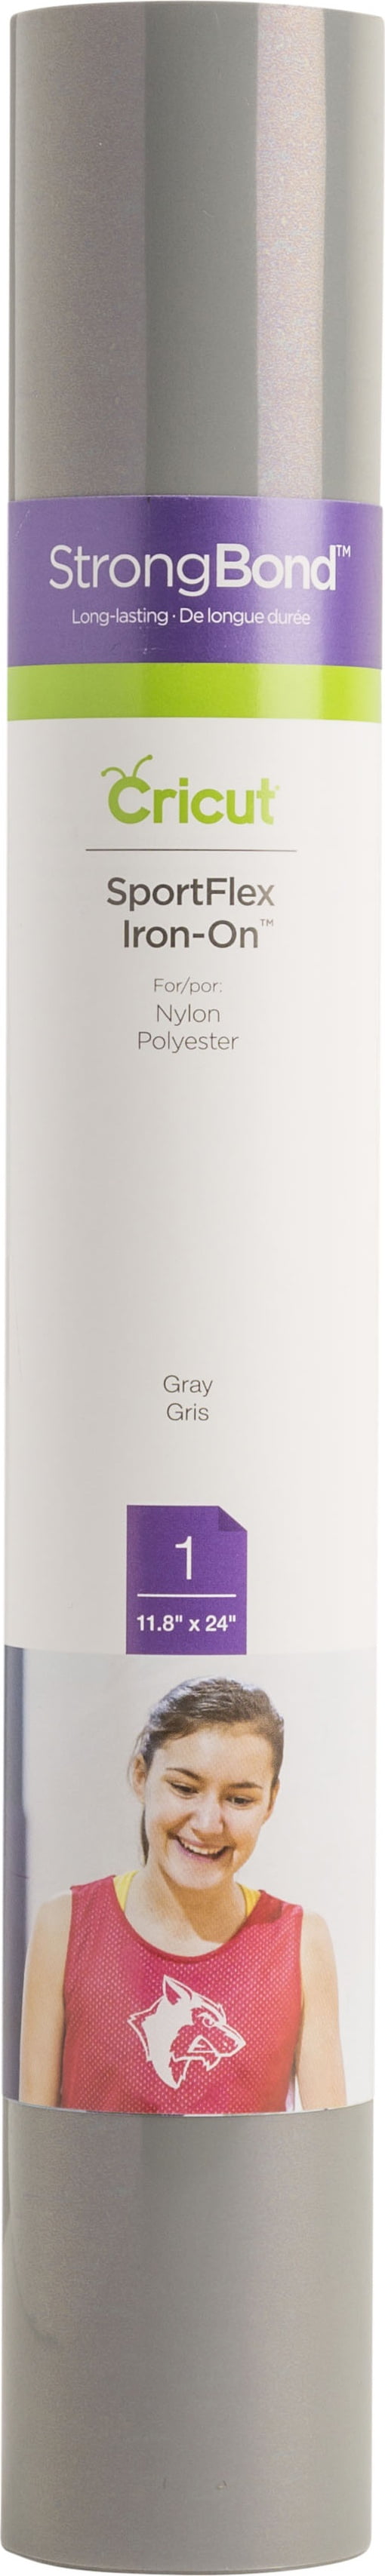 Cricut Sportflex Iron-On, Gray, 11.8 inch x 24 inch